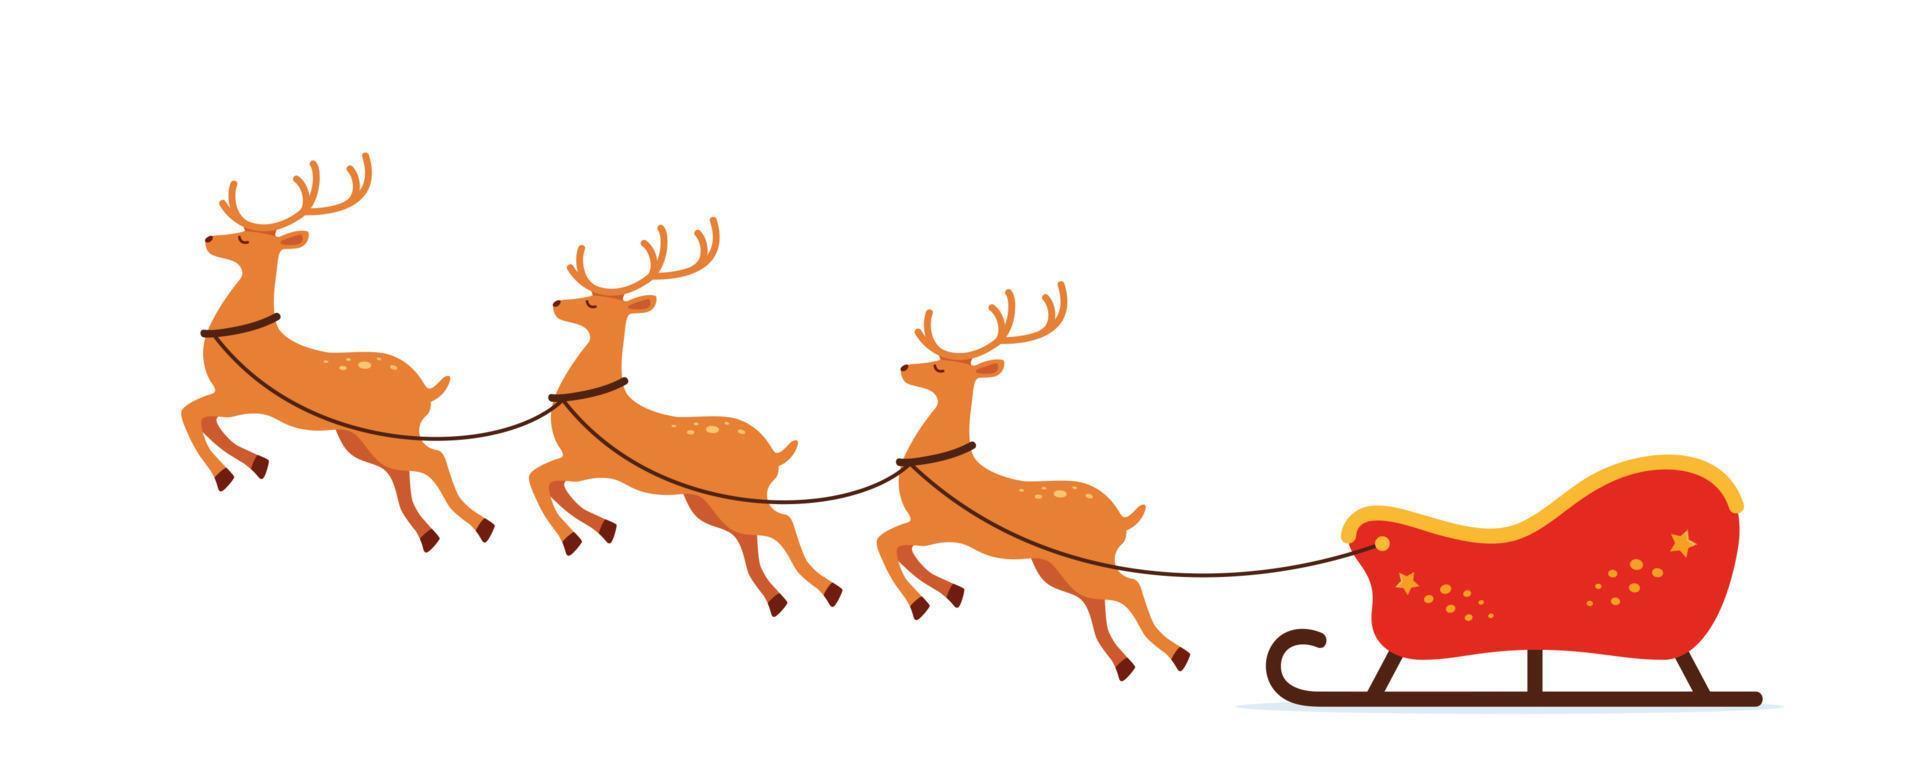 Santa on Sleigh and His Reindeers. Christmas Greeting card vector illustration.